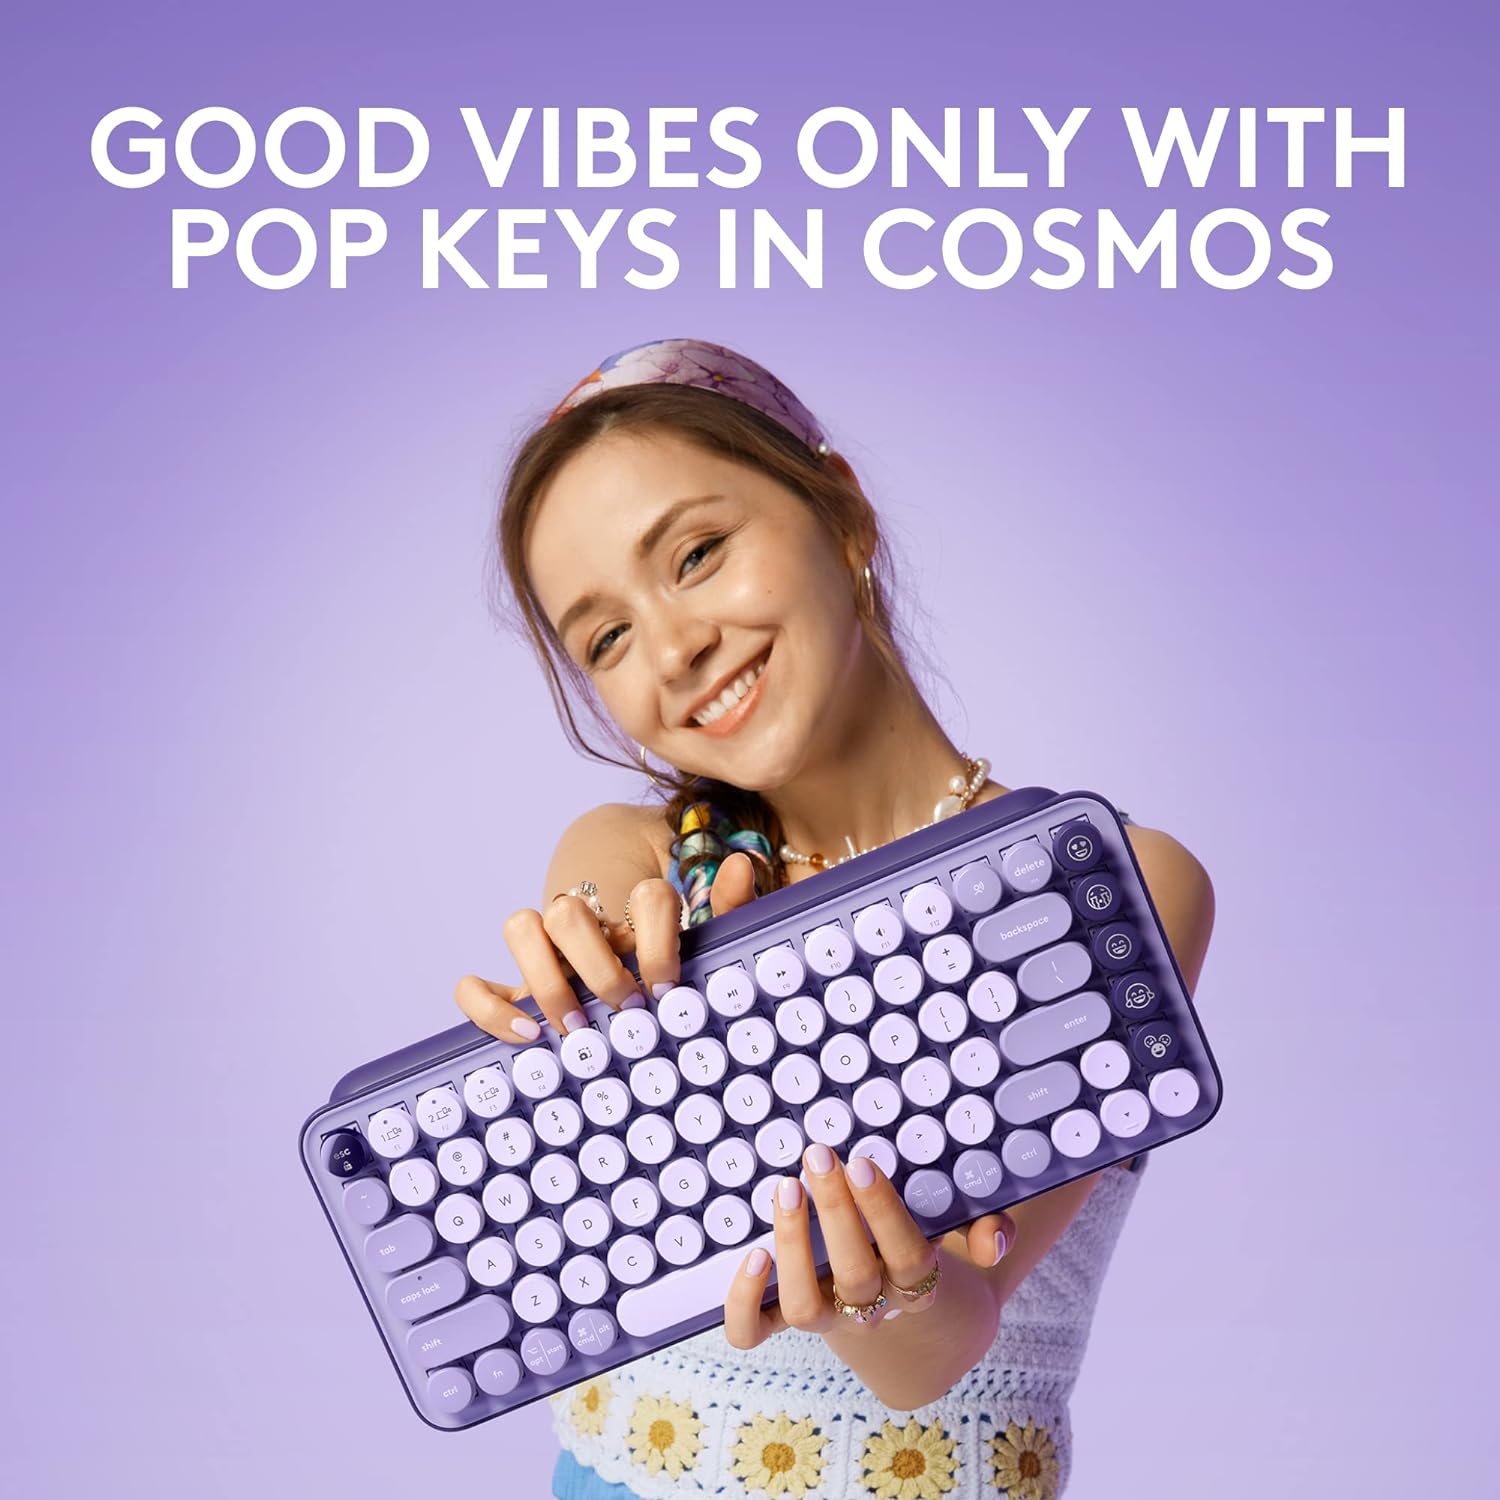 Logitech POP Keys Wireless and Bluetooth Mechanical Keyboard with Customizable Emoji Keys